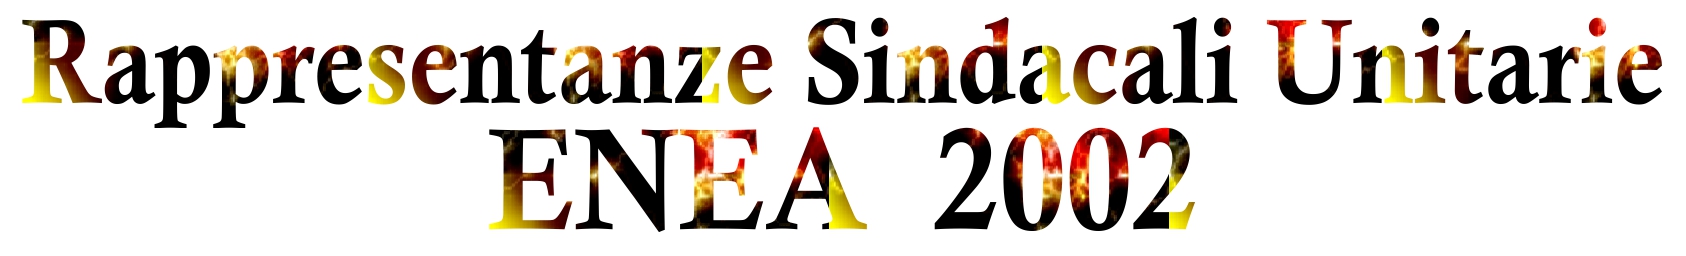 RSU 2002 ENEA logo